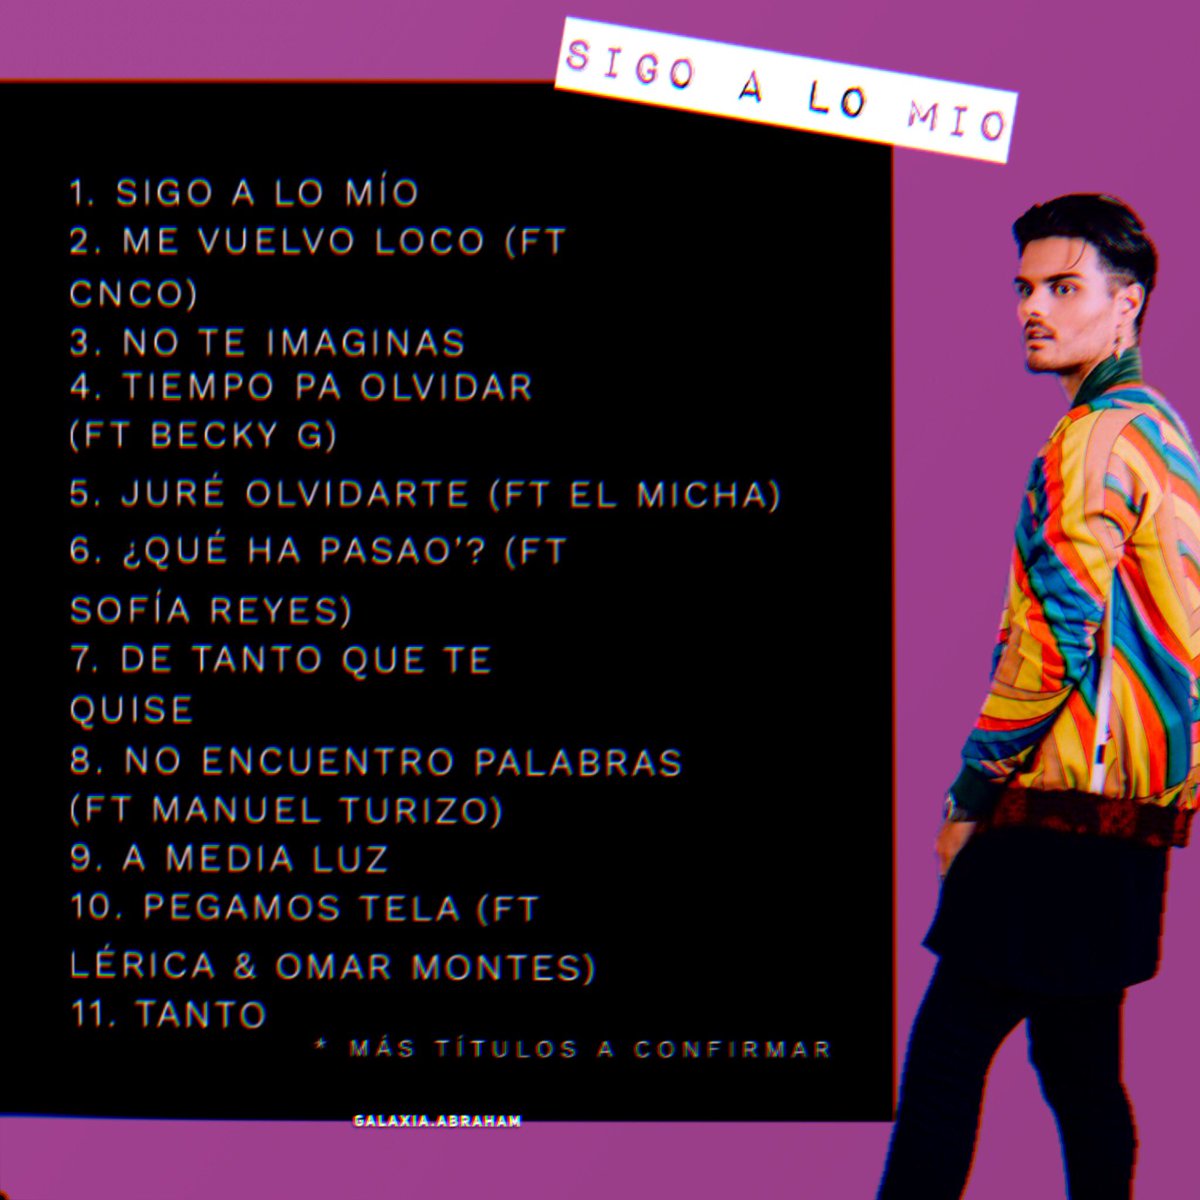 Abraham Mateo - Sigo a Lo Mío: lyrics and songs